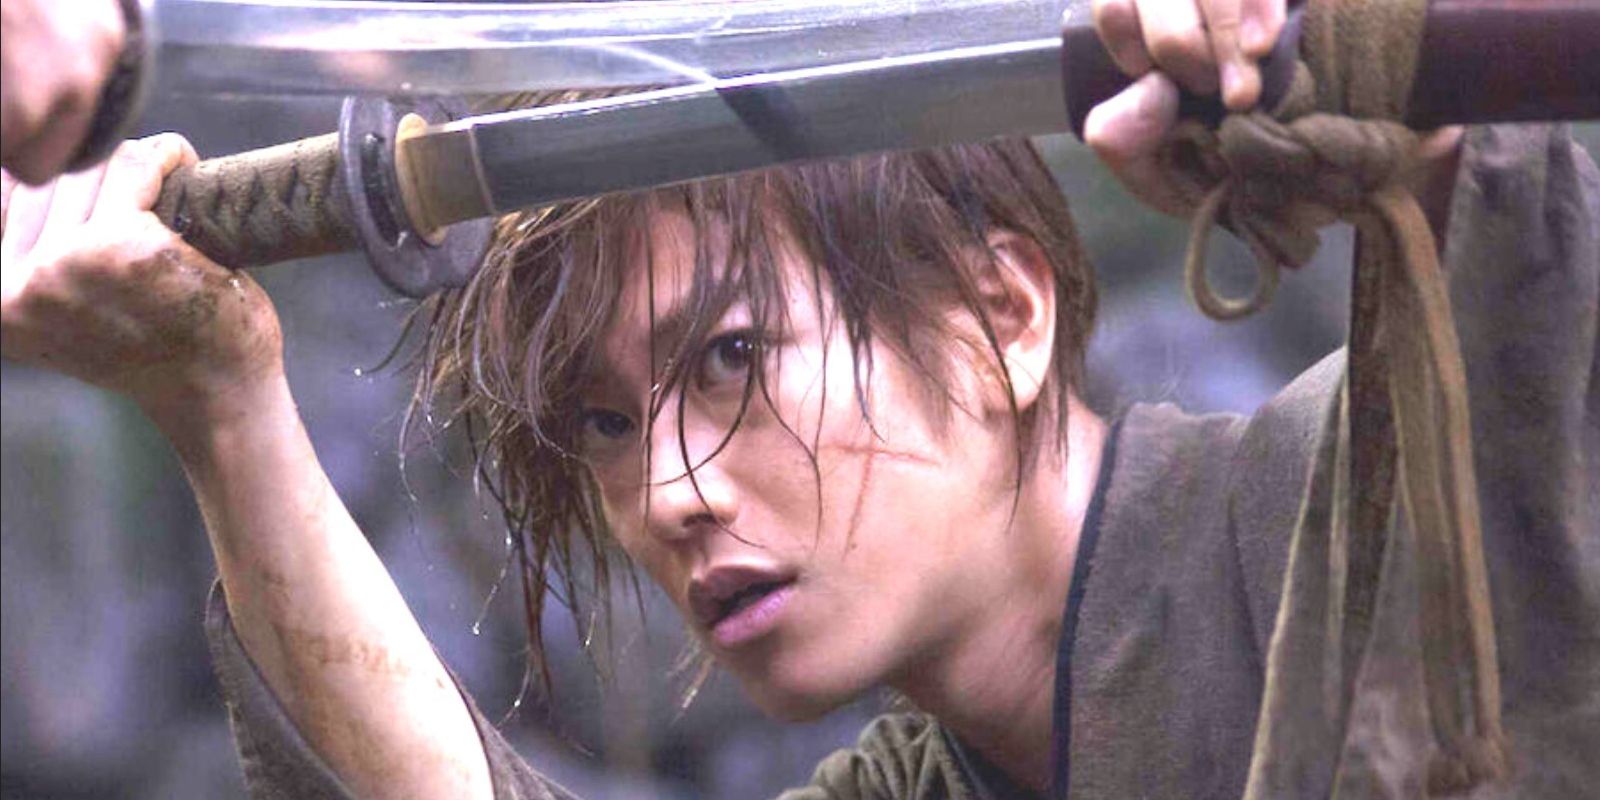 Rurouni Kenshin Kenshin Himura in the middle of a sword fight